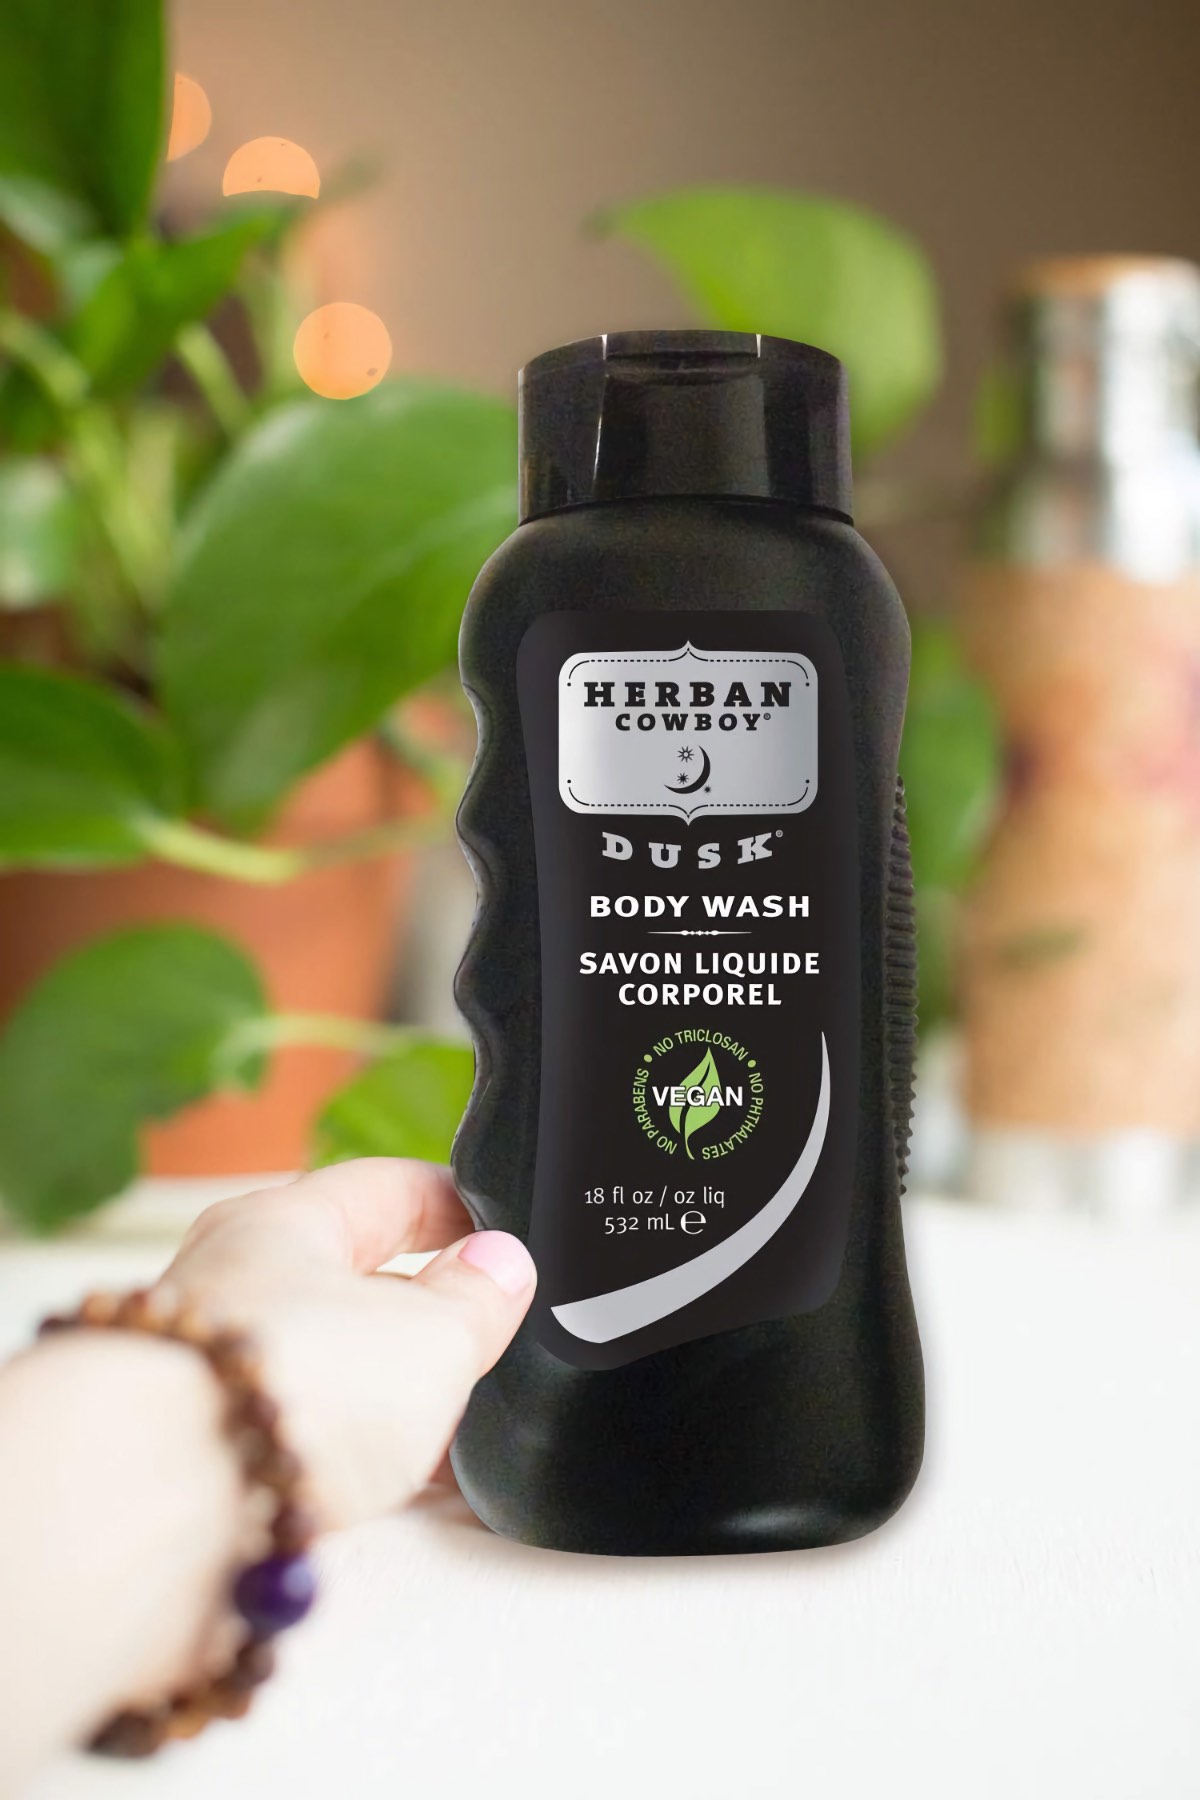 Vegan hand holding a bottle of Herban Cowboy's men's body wash.